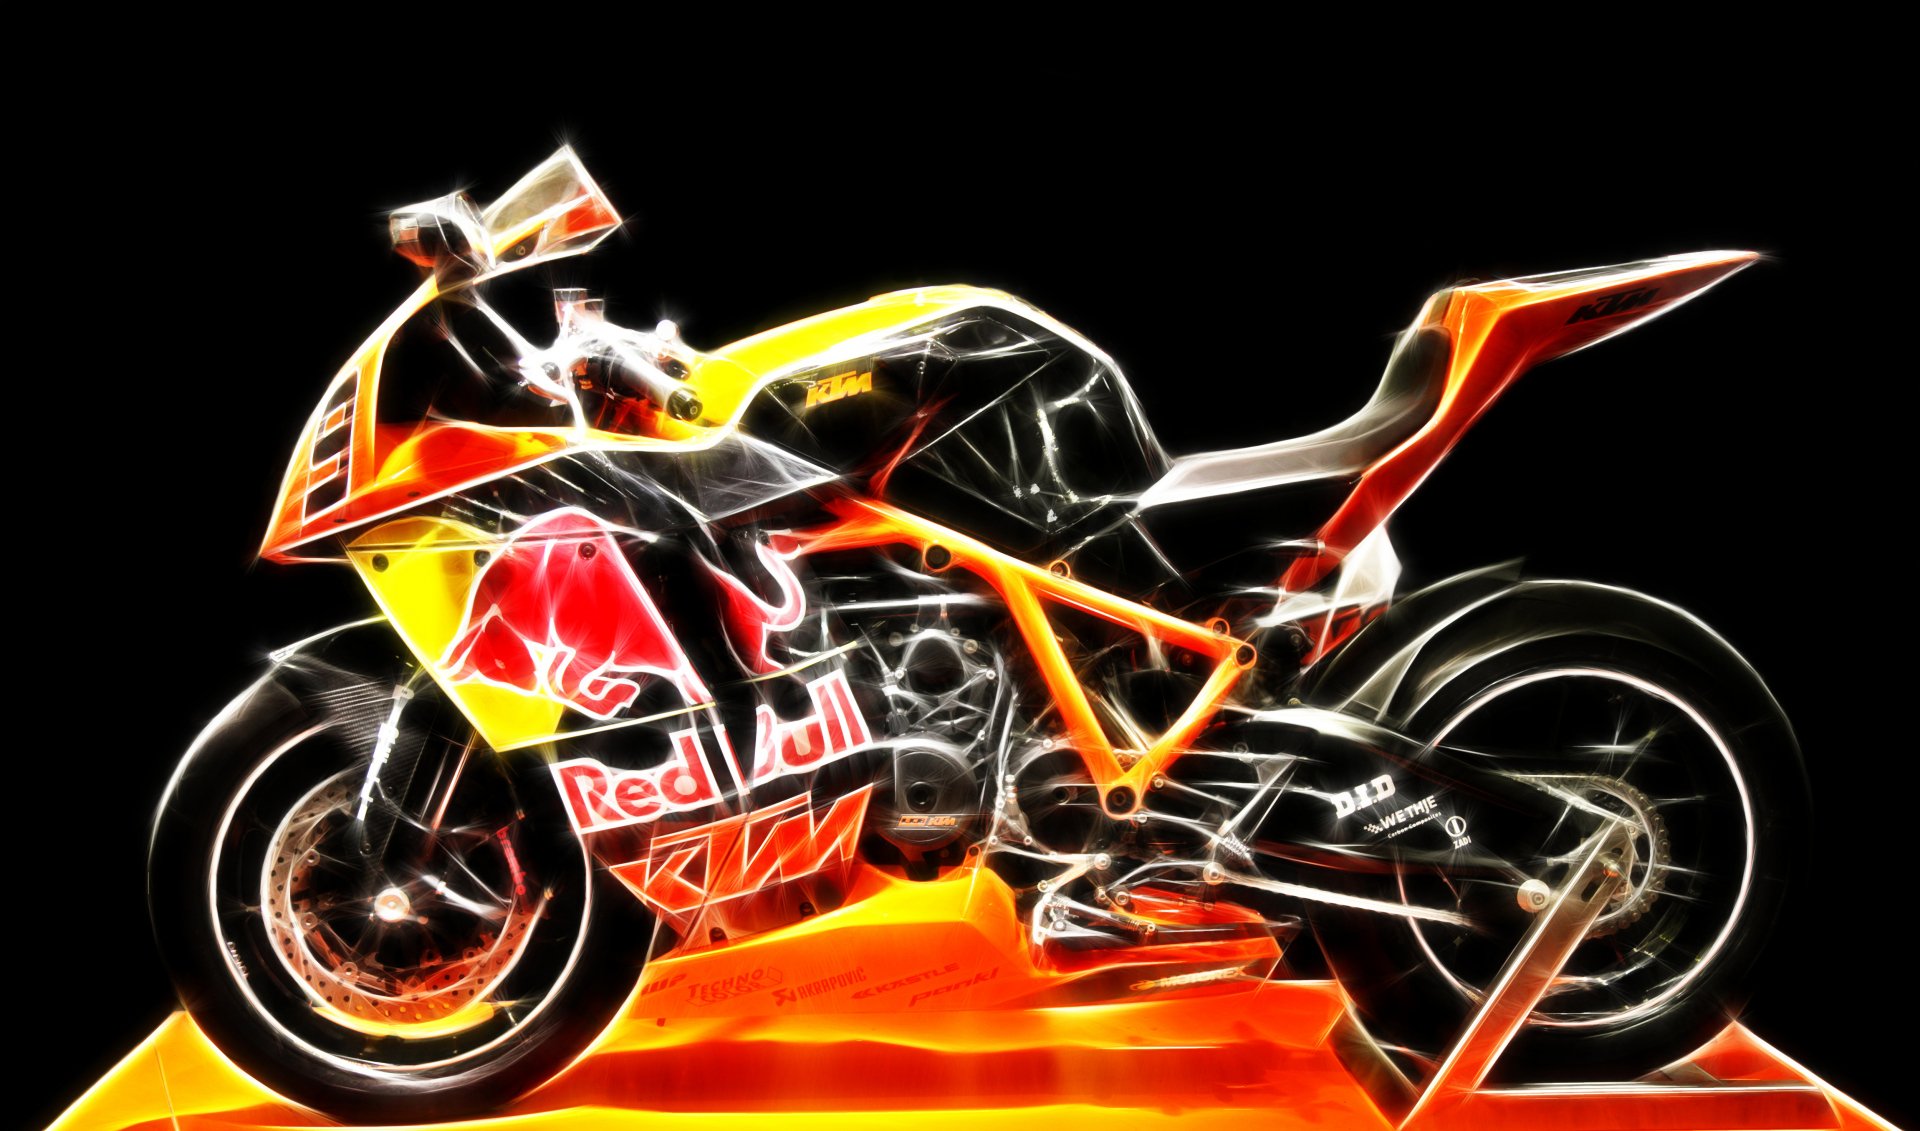 Motorcycle Racing 4k Ultra HD Wallpaper | Background Image | 5000x2945